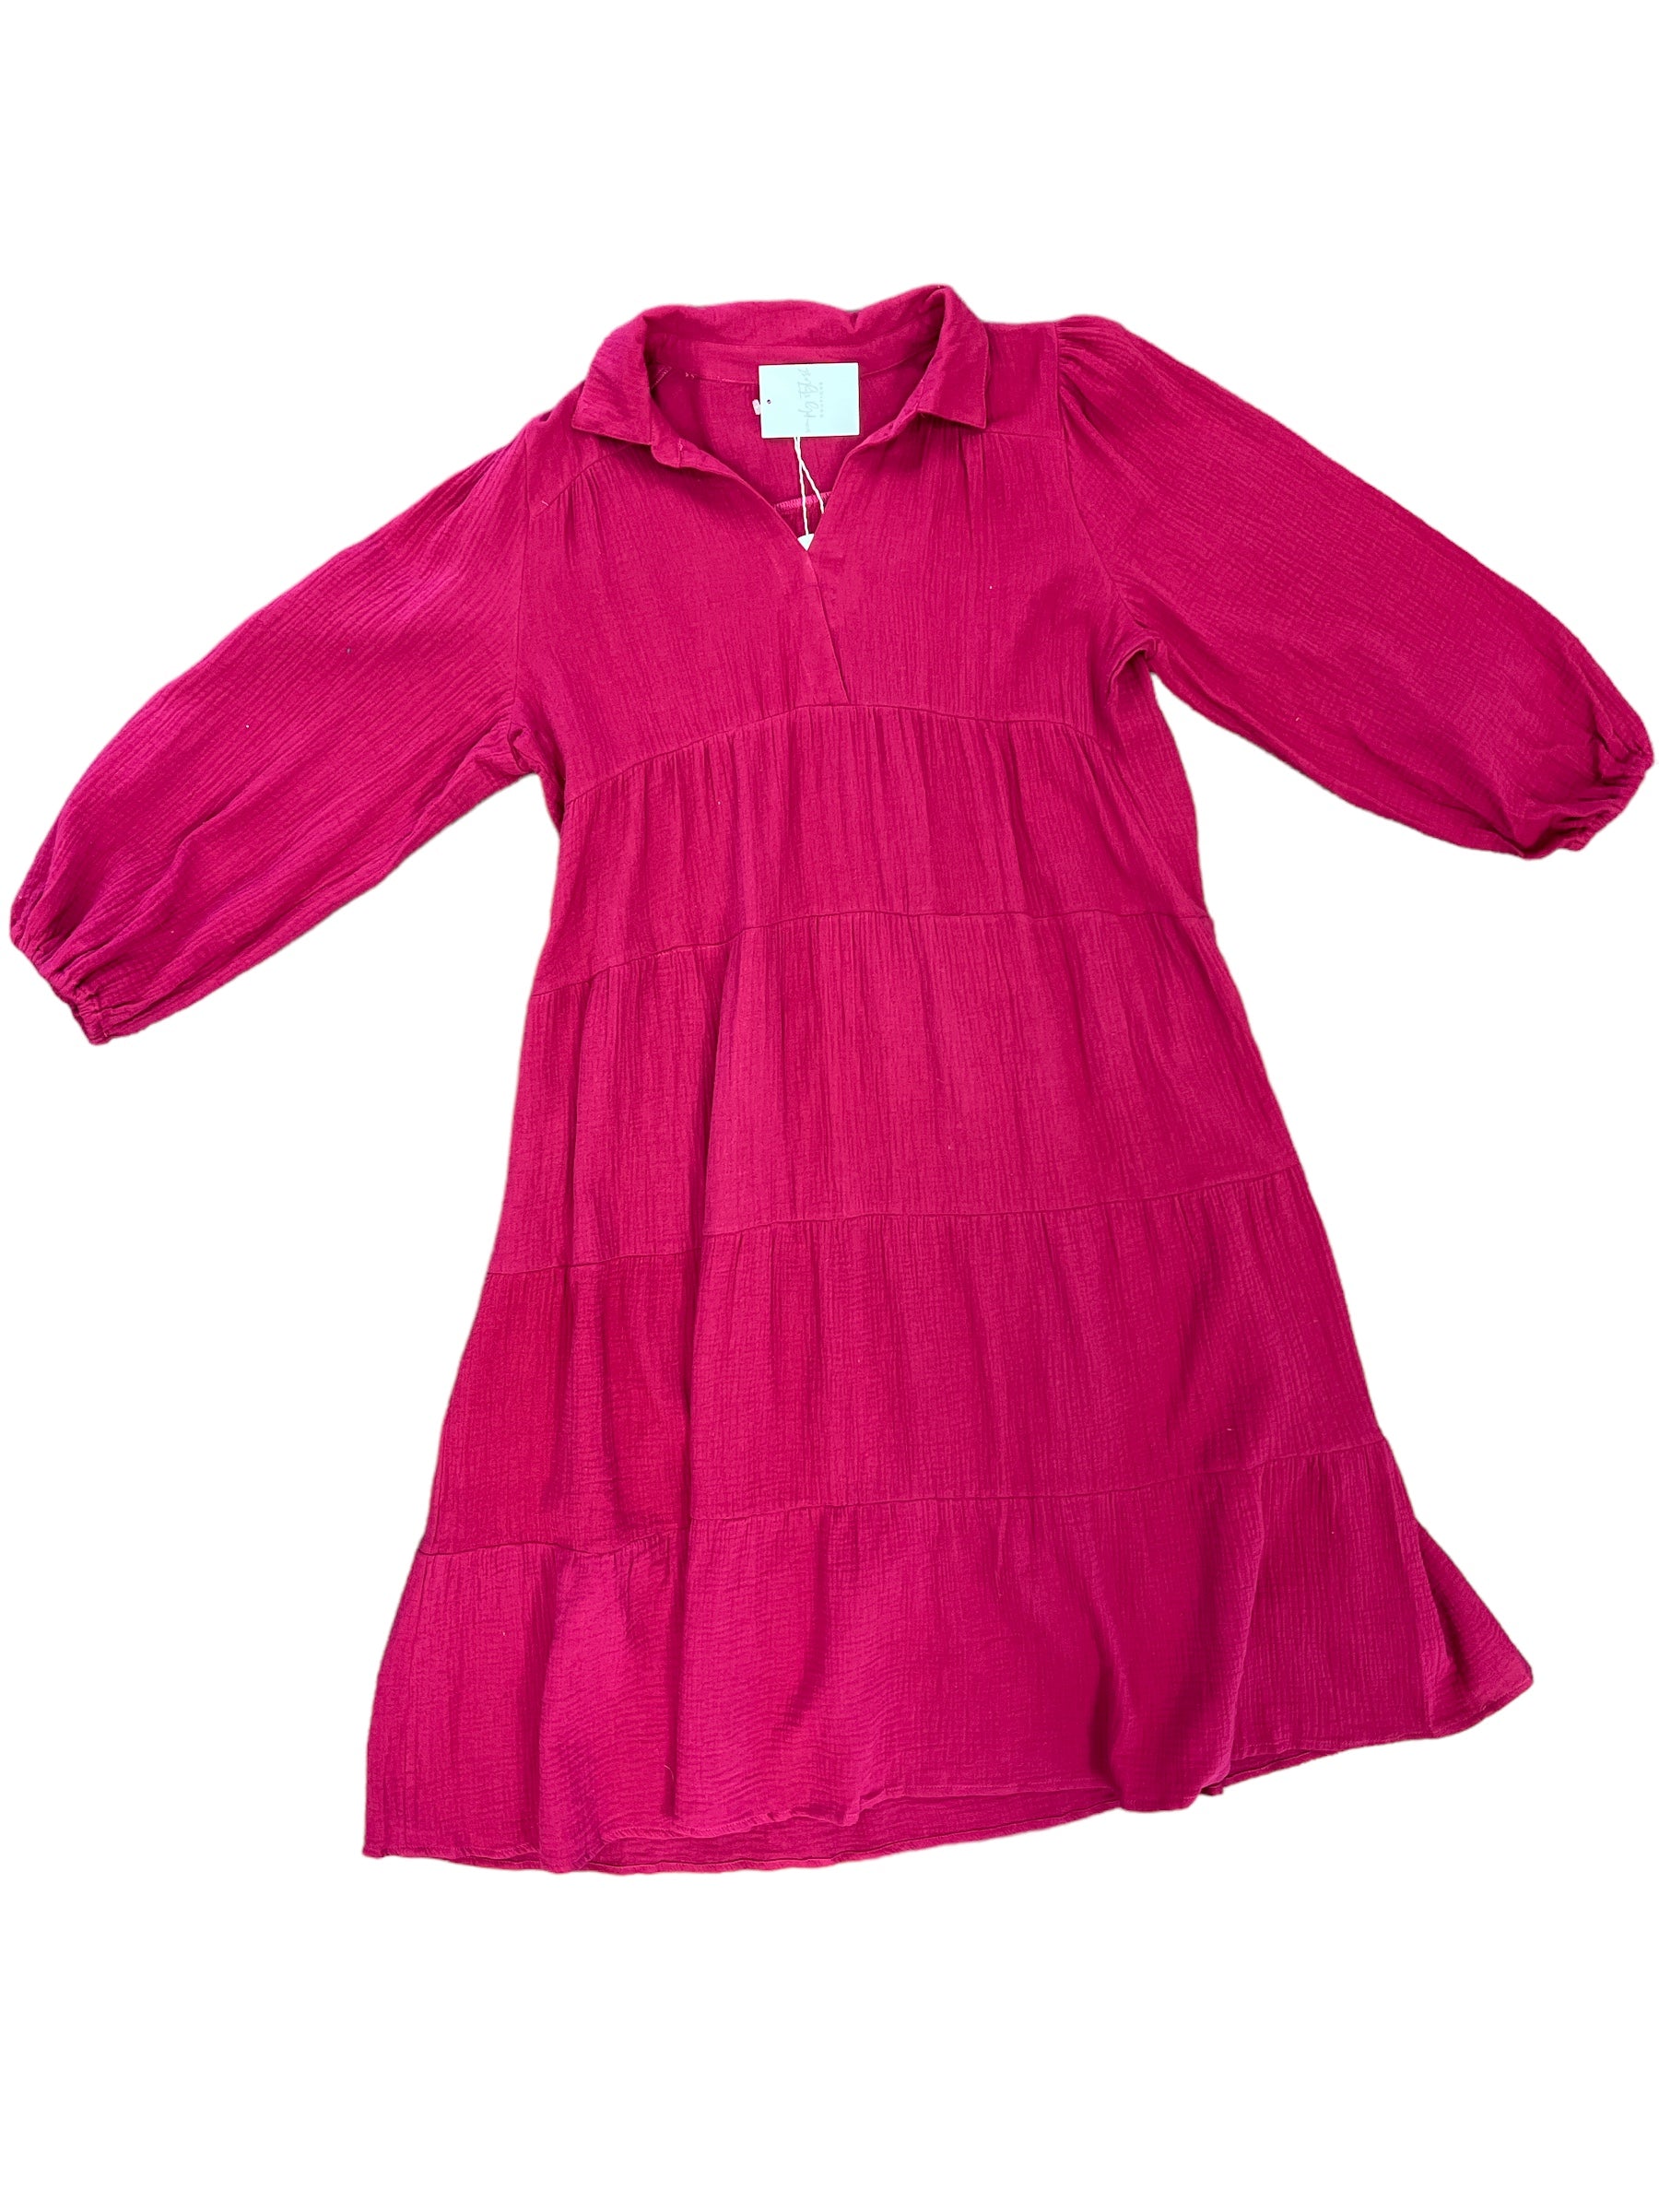 Razzy Raspberry Dress-310 Dresses-Simply Stylish Boutique-Simply Stylish Boutique | Women’s & Kid’s Fashion | Paducah, KY